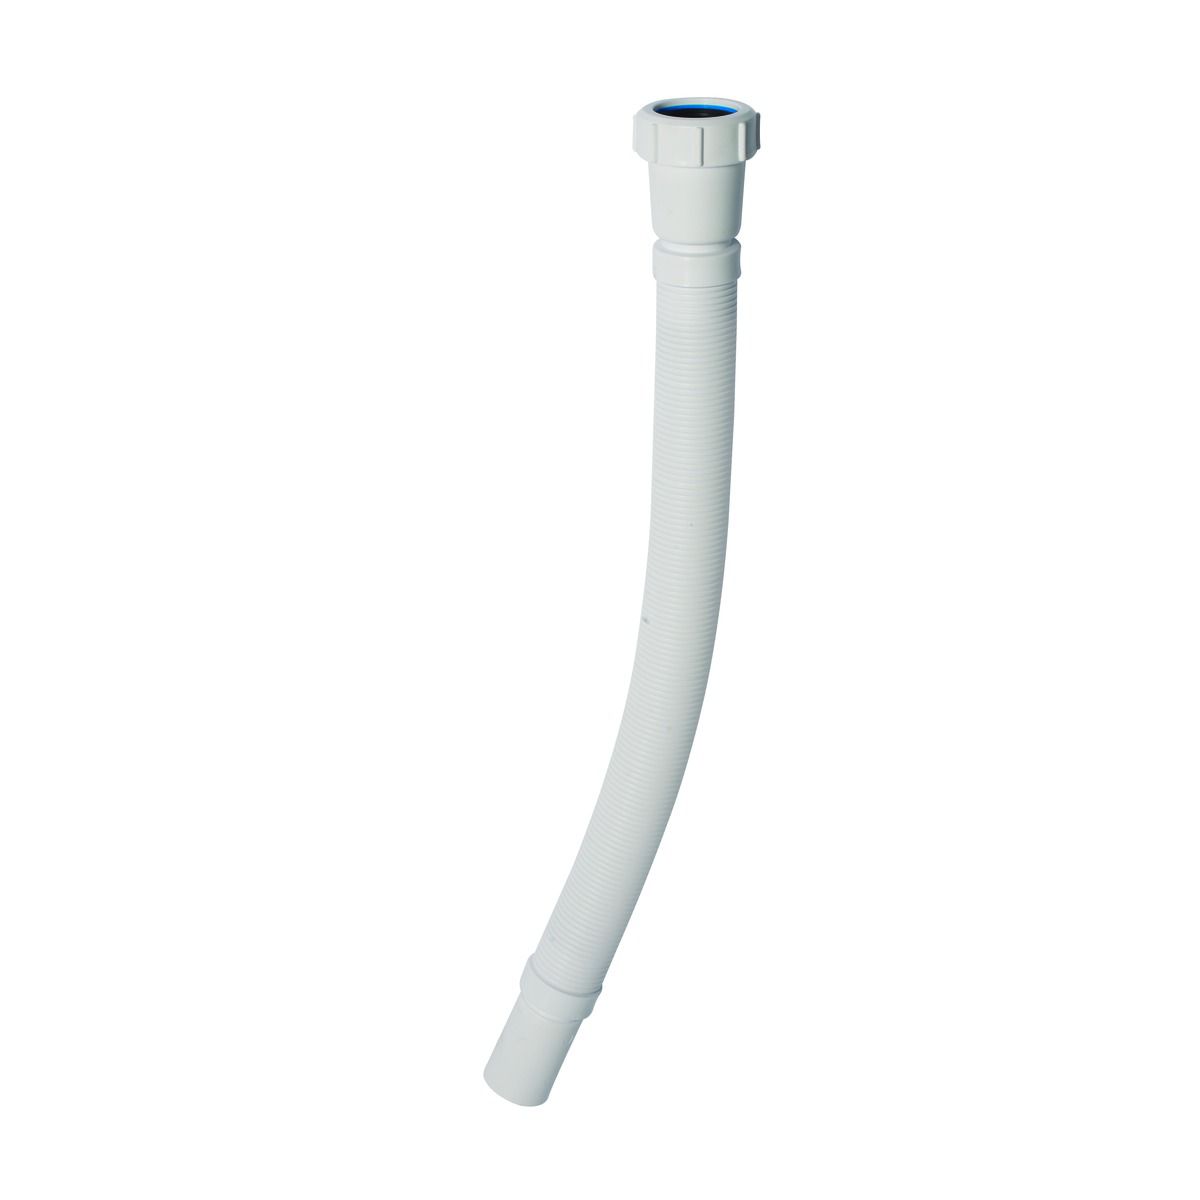 Image of McAlpine Flexcon1 Flexible Pipe Connector - 32 x 457mm